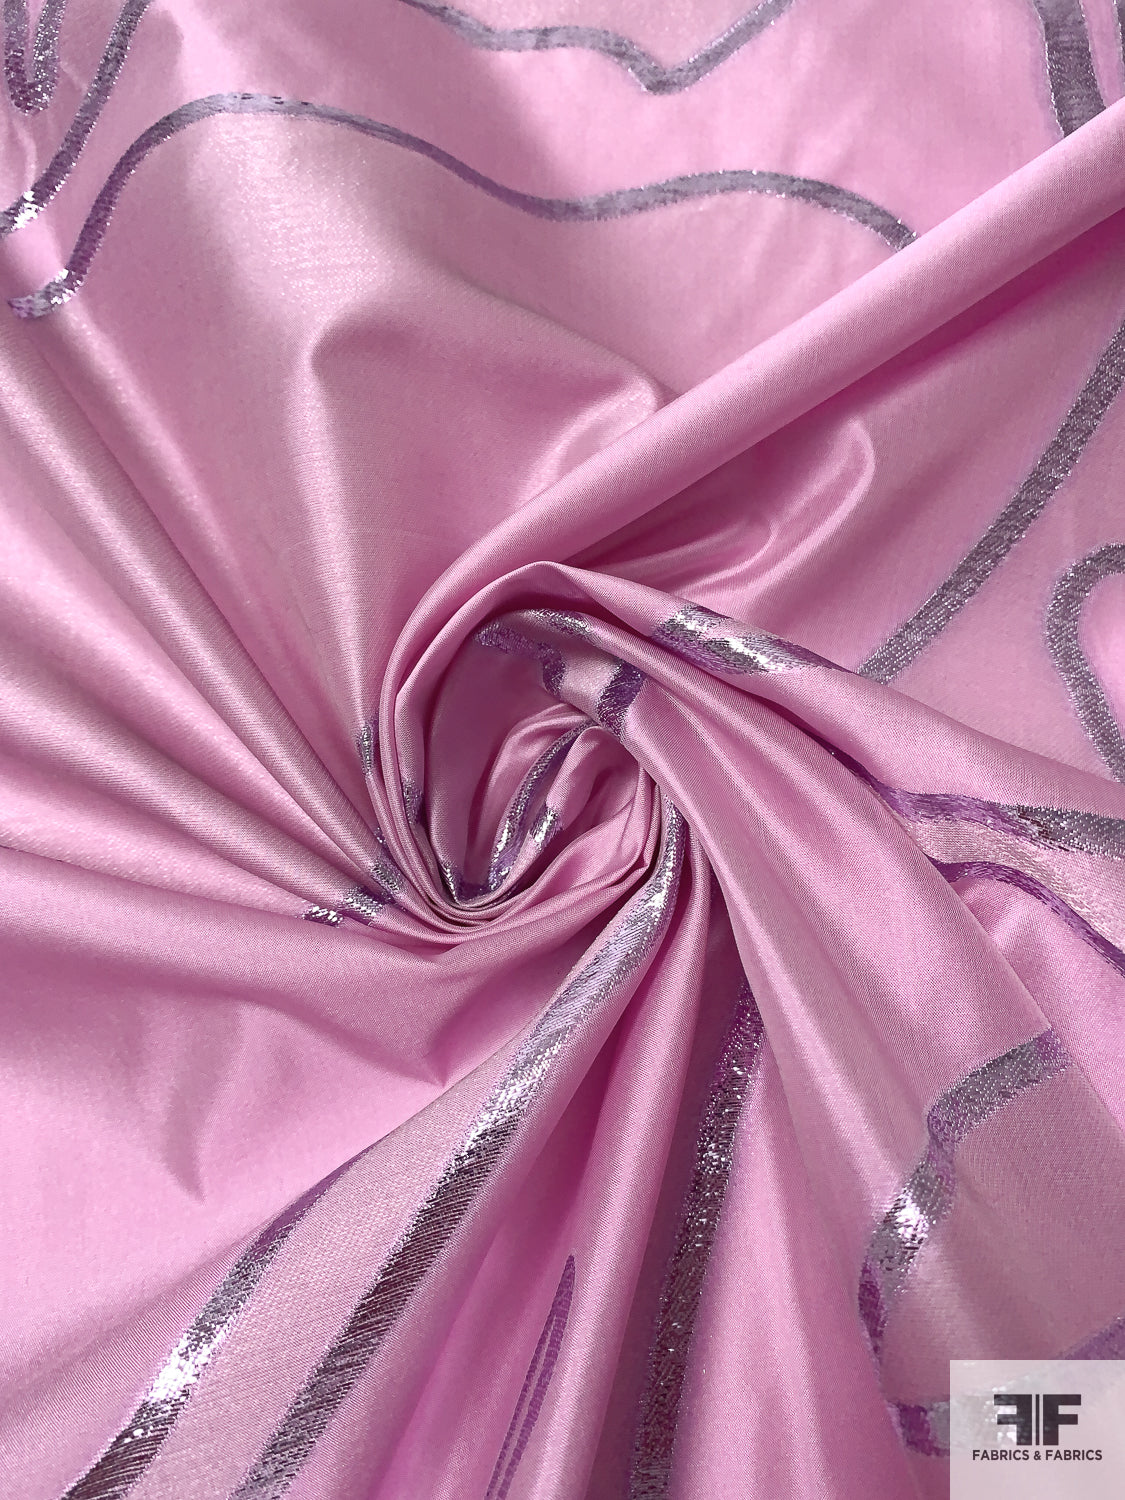 Light Pink Luxury Nylon Spandex Fabric By The Yard